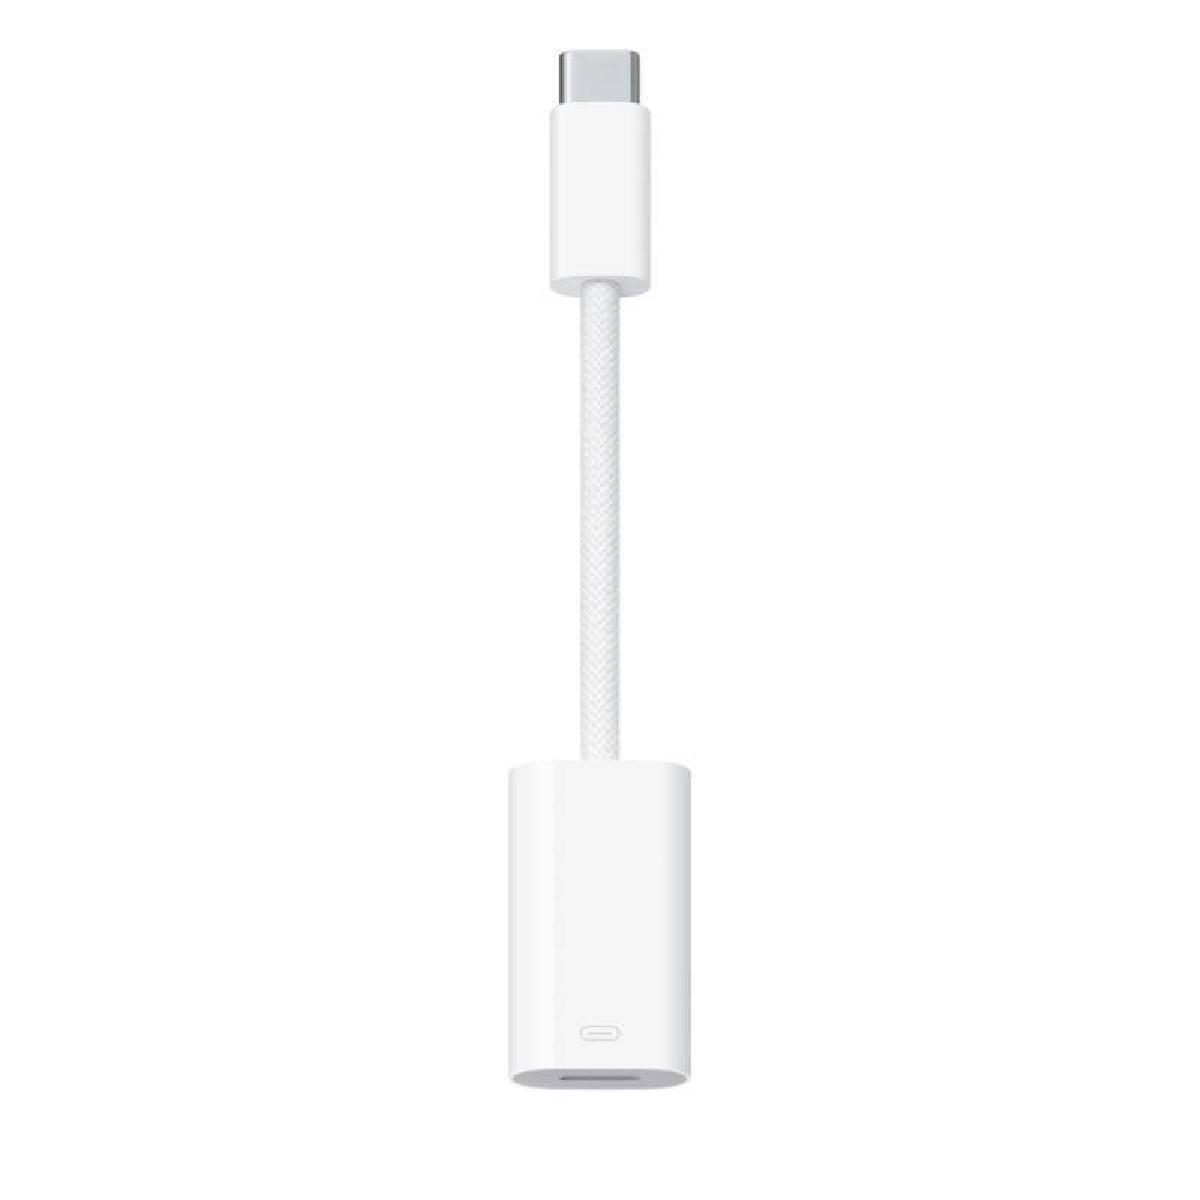 Apple Adapter USB-C male to Lightning female (MUQX3ZM/A)